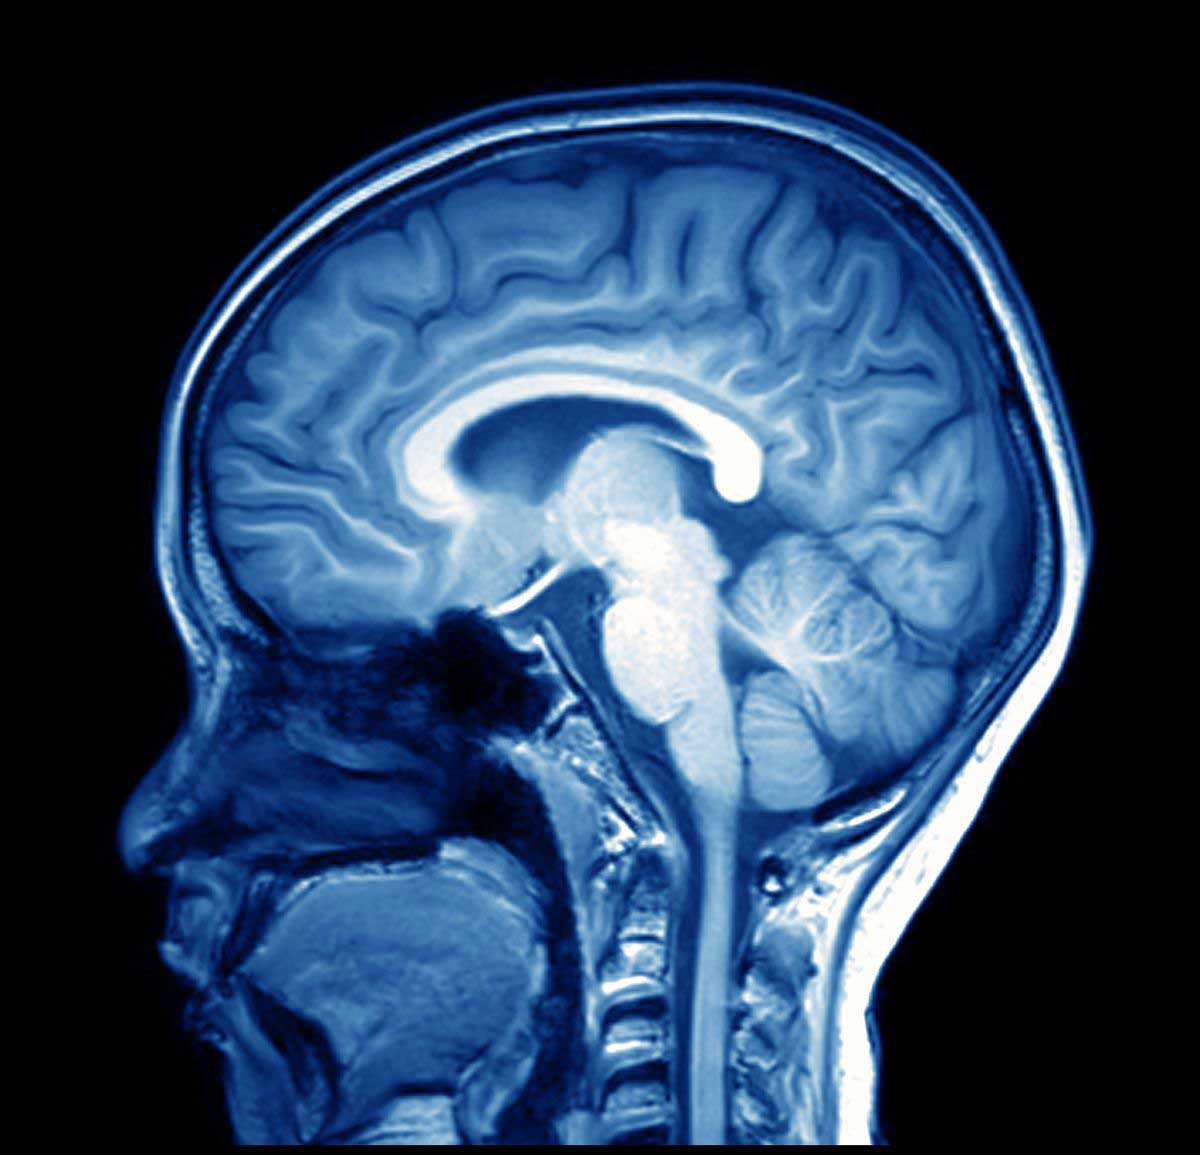 Advanced MRI brain scan analysis may help predict stroke ...